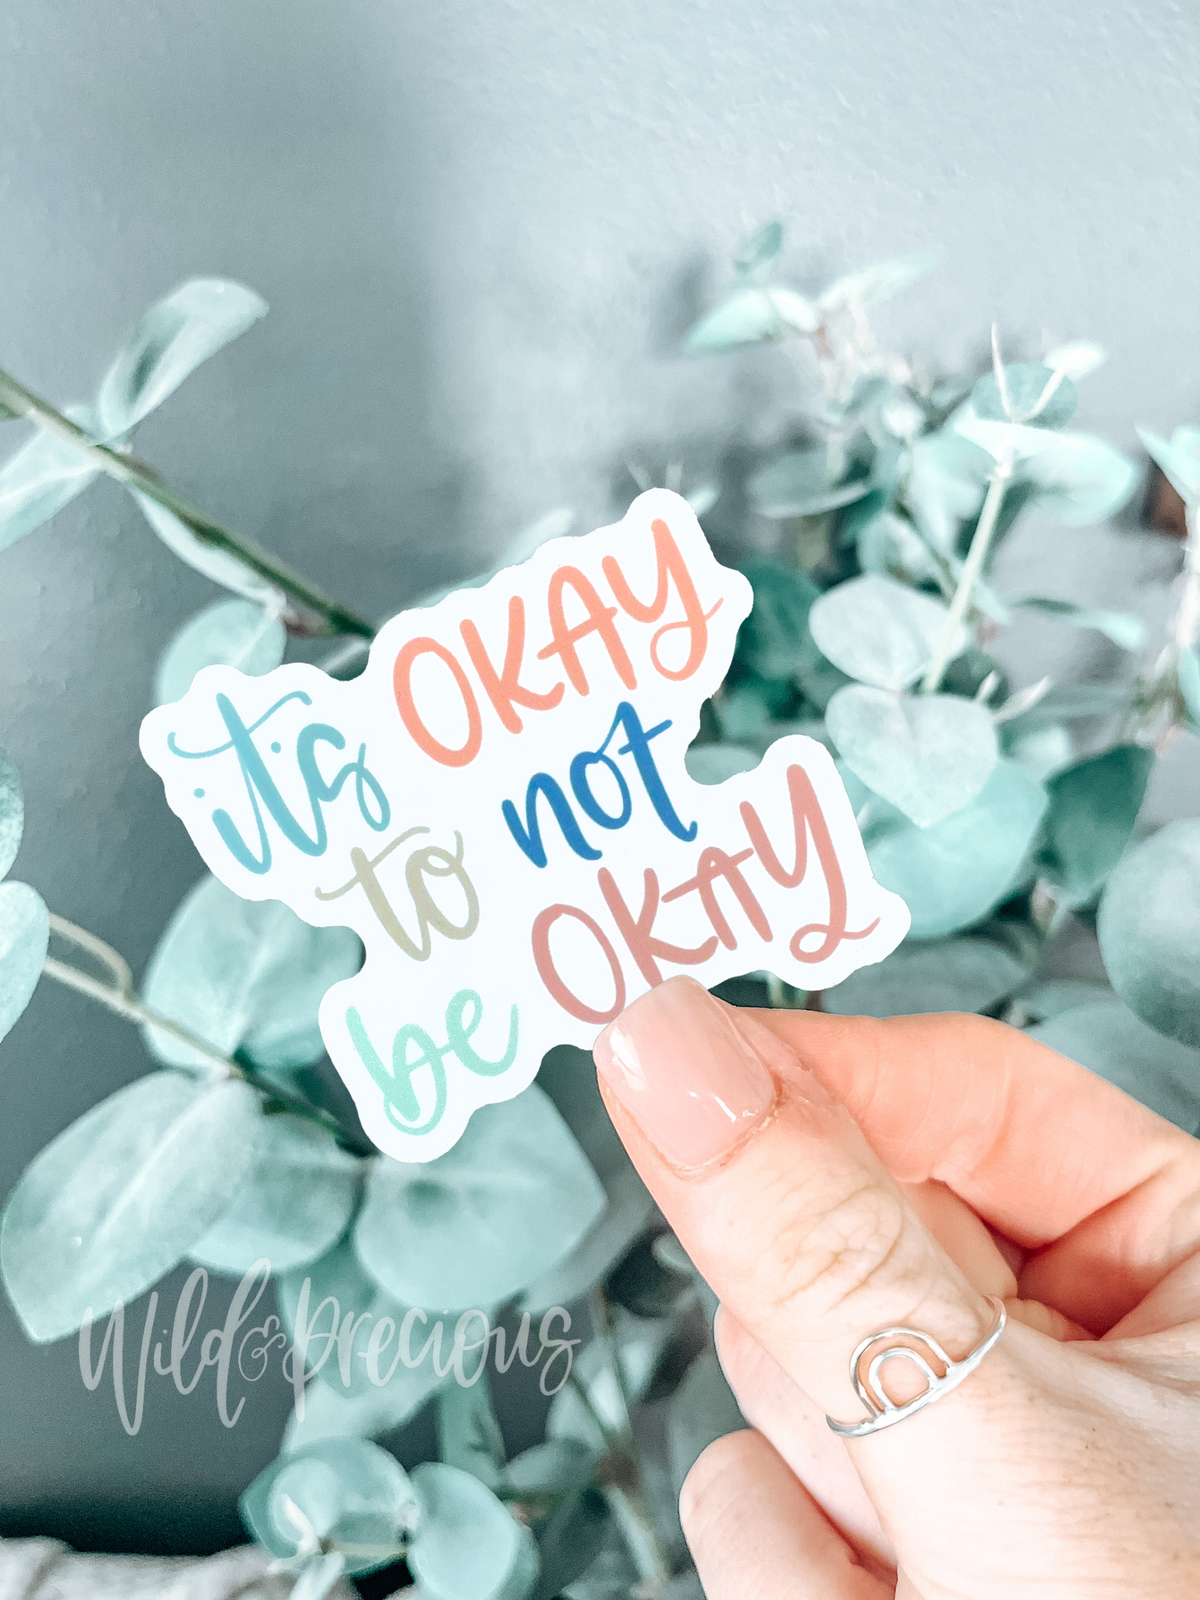 It's Okay to Not be Okay Sticker